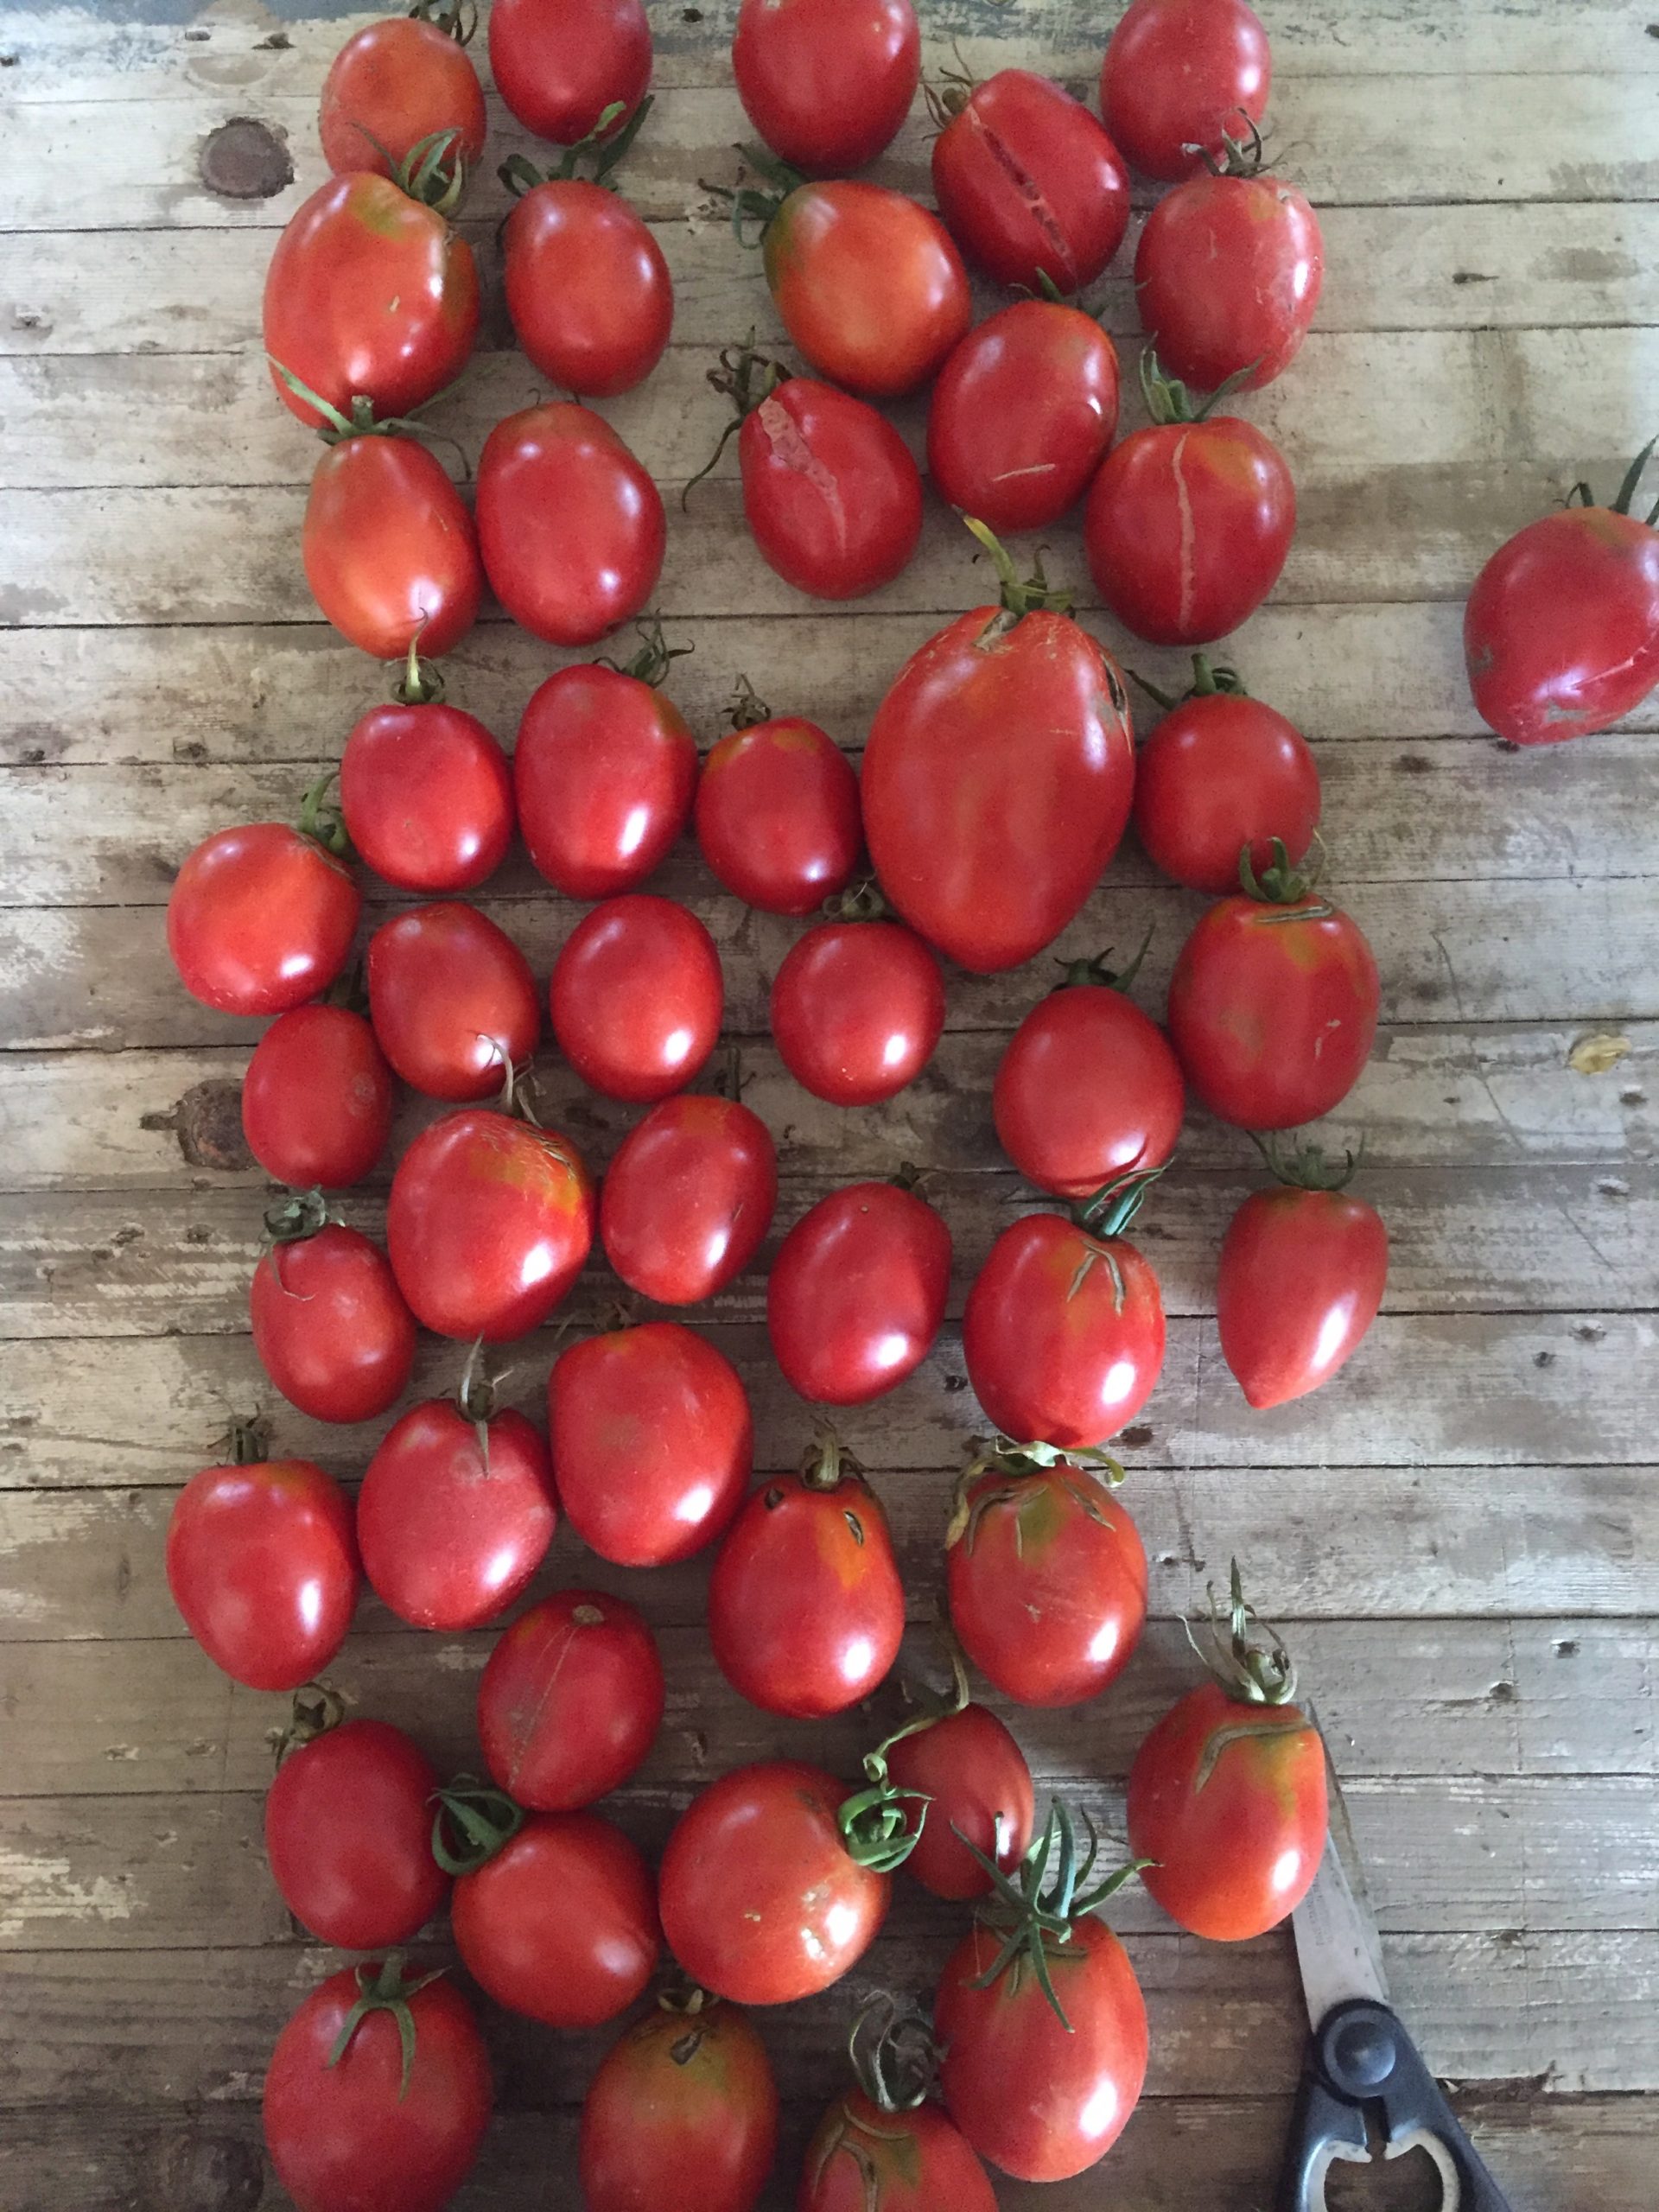 A large tomato harvest.